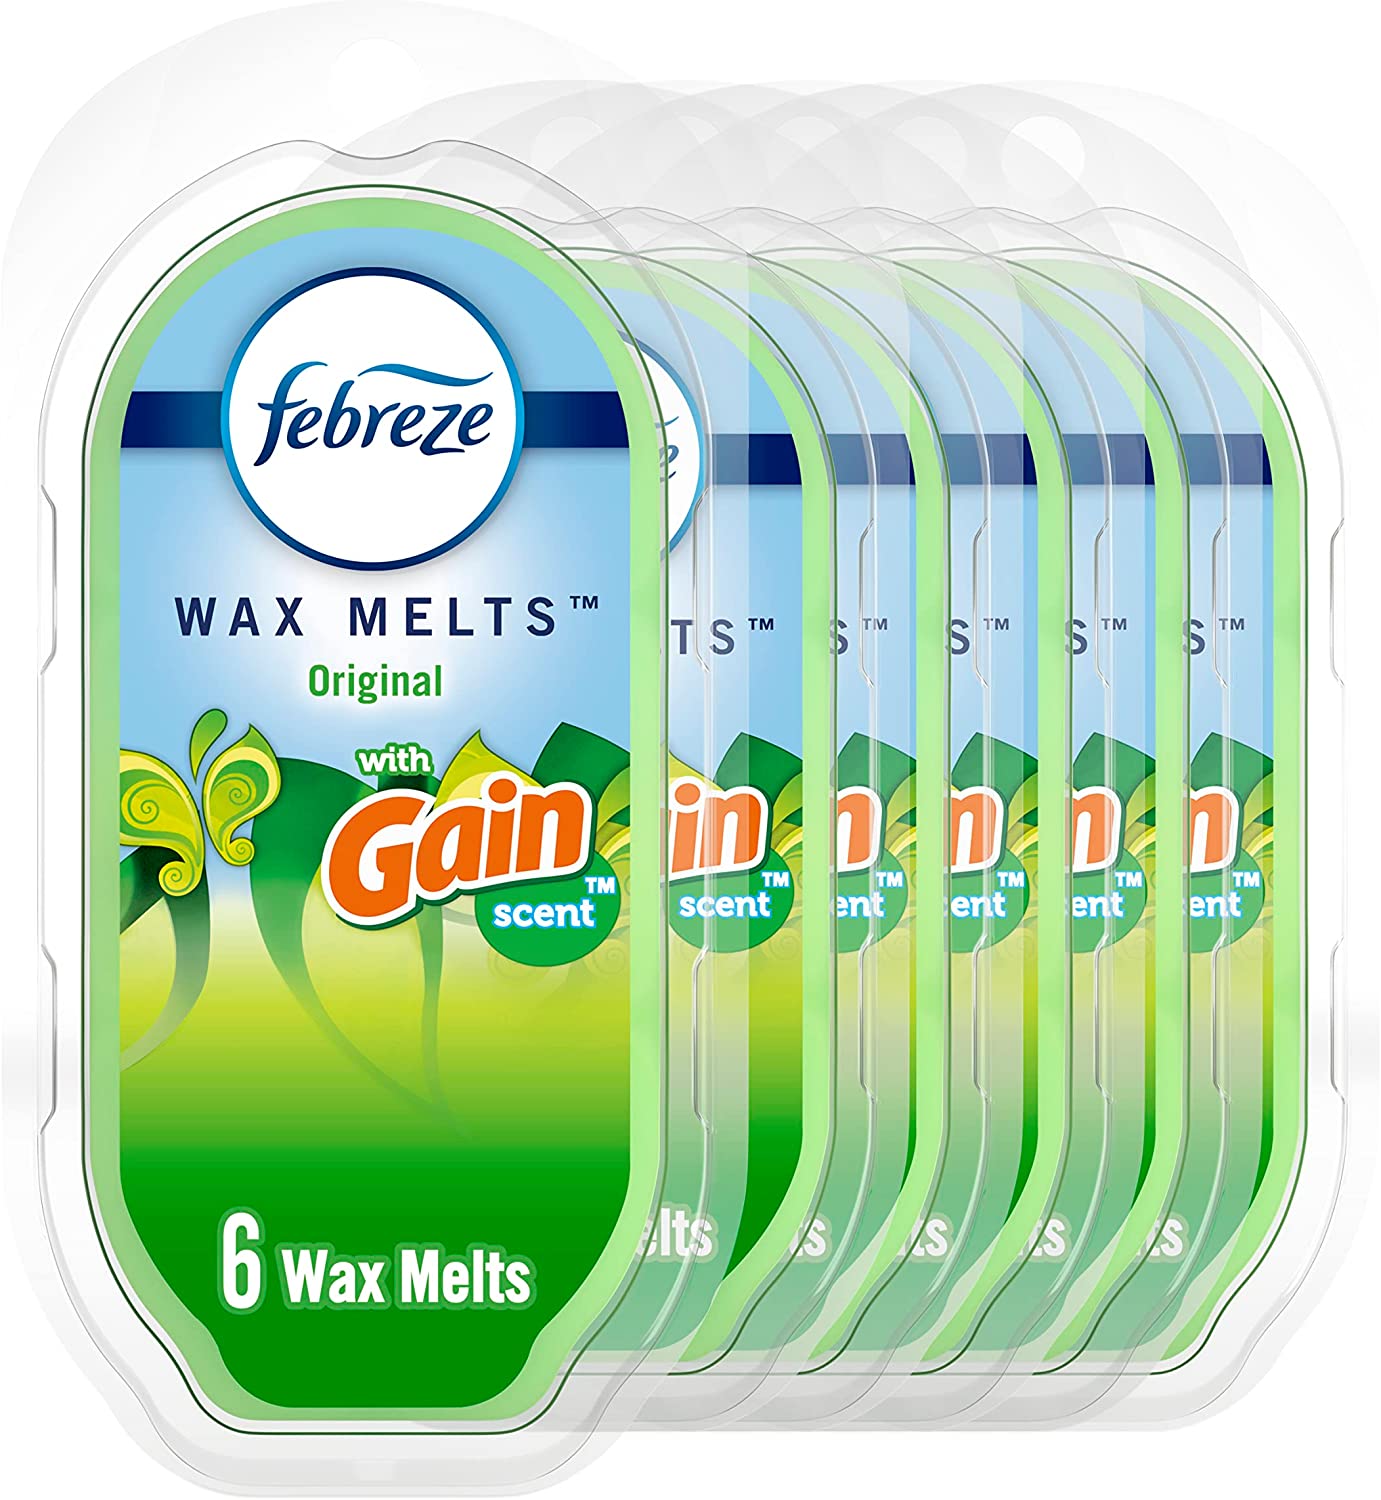 Wonderland Scented Wax Melts, ScentSationals, 2.5 oz (1-Pack)